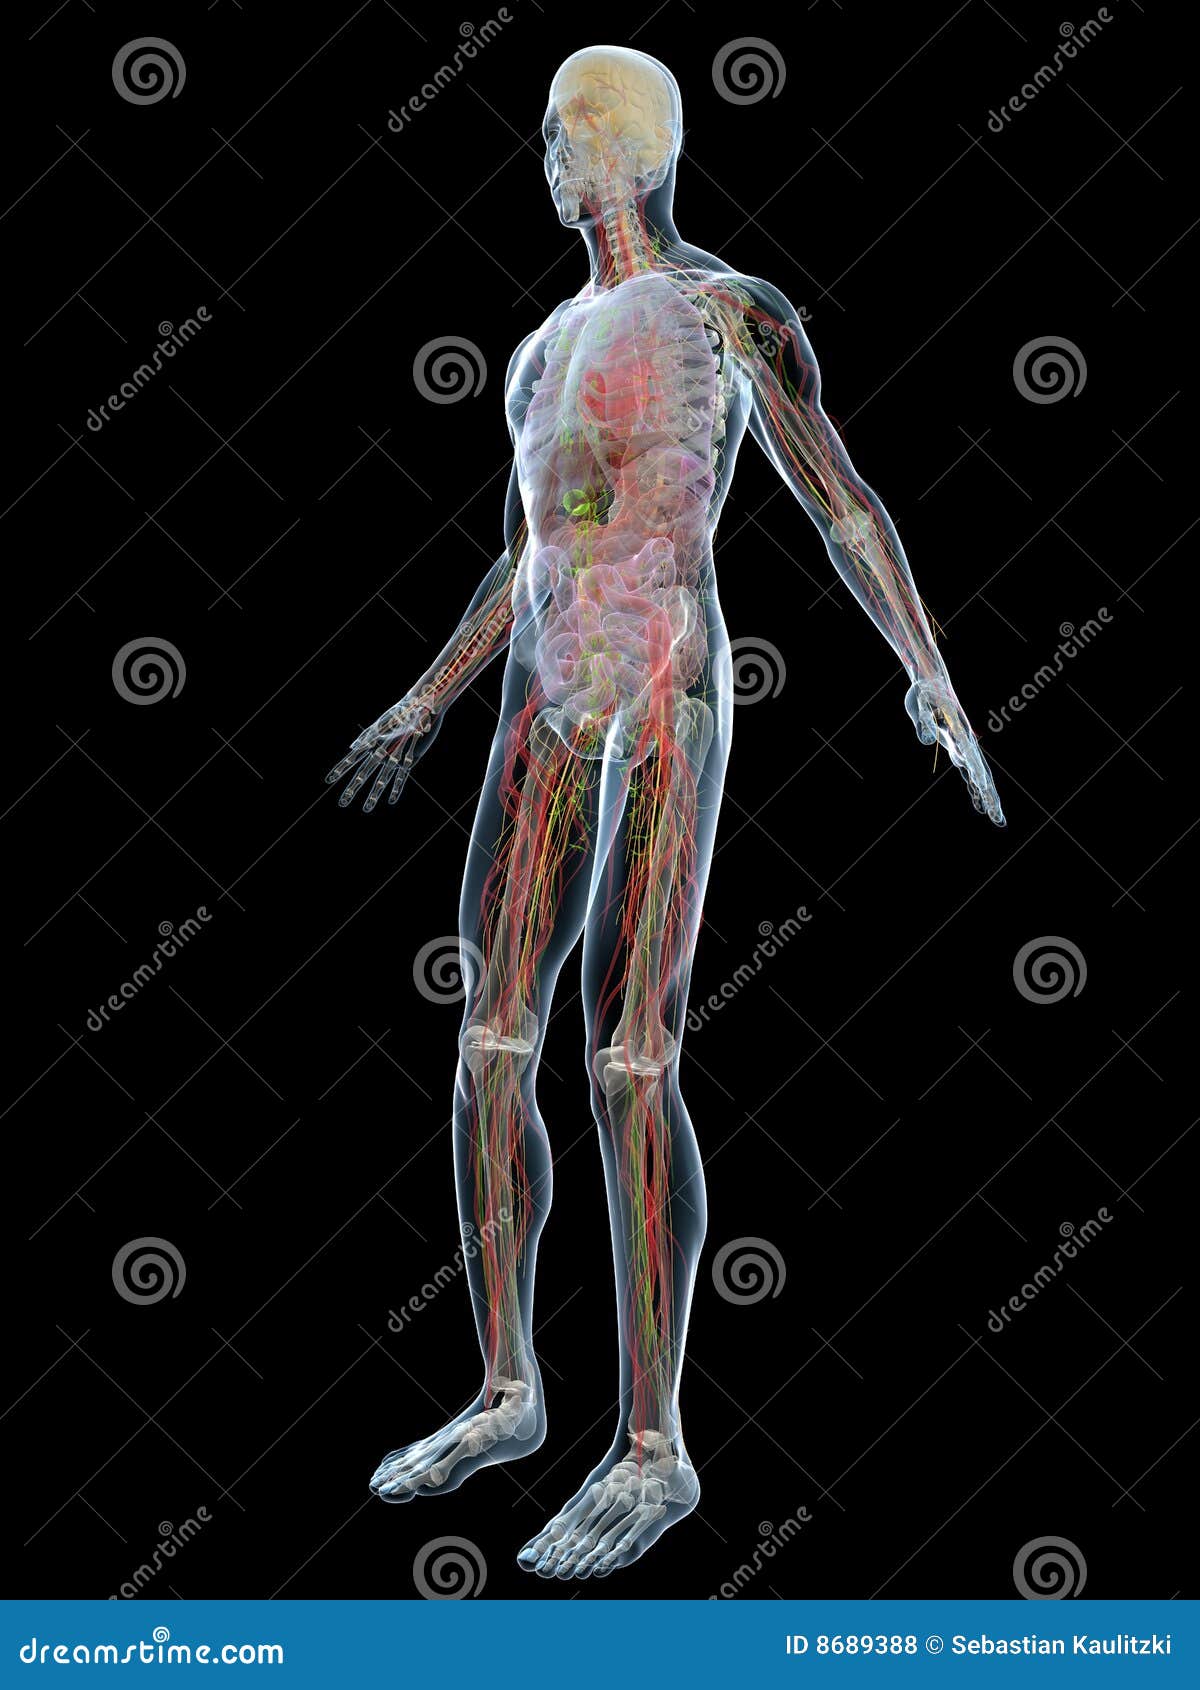 Human anatomy stock illustration. Illustration of science - 8689388